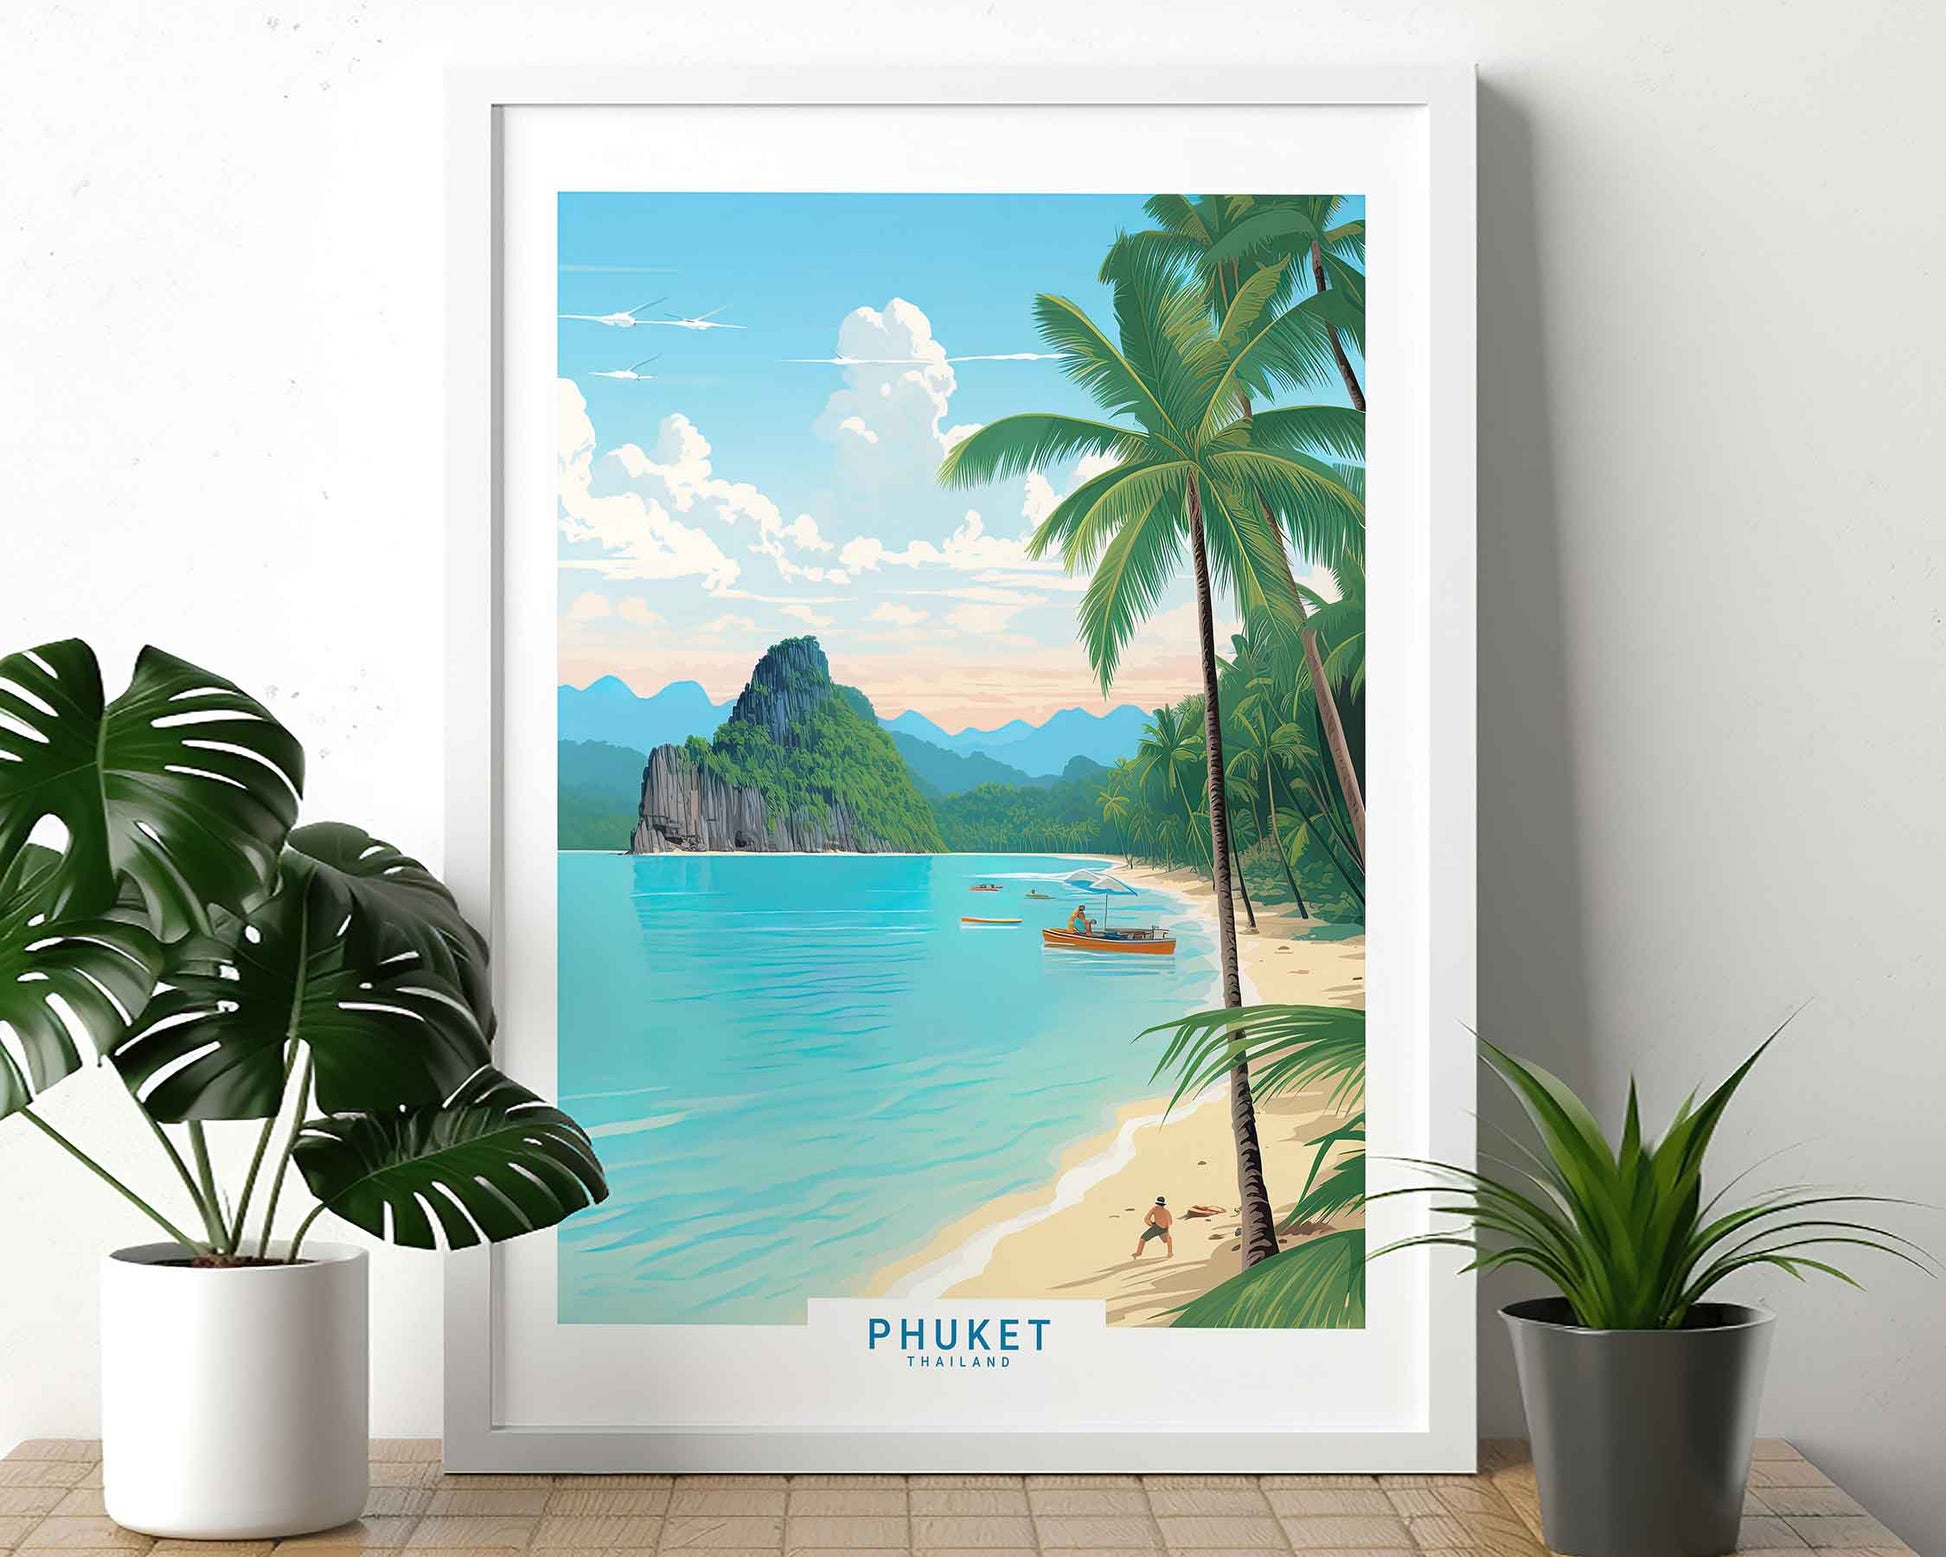 Framed Image of Phuket Thailand Travel Poster Prints Wall Art Illustration